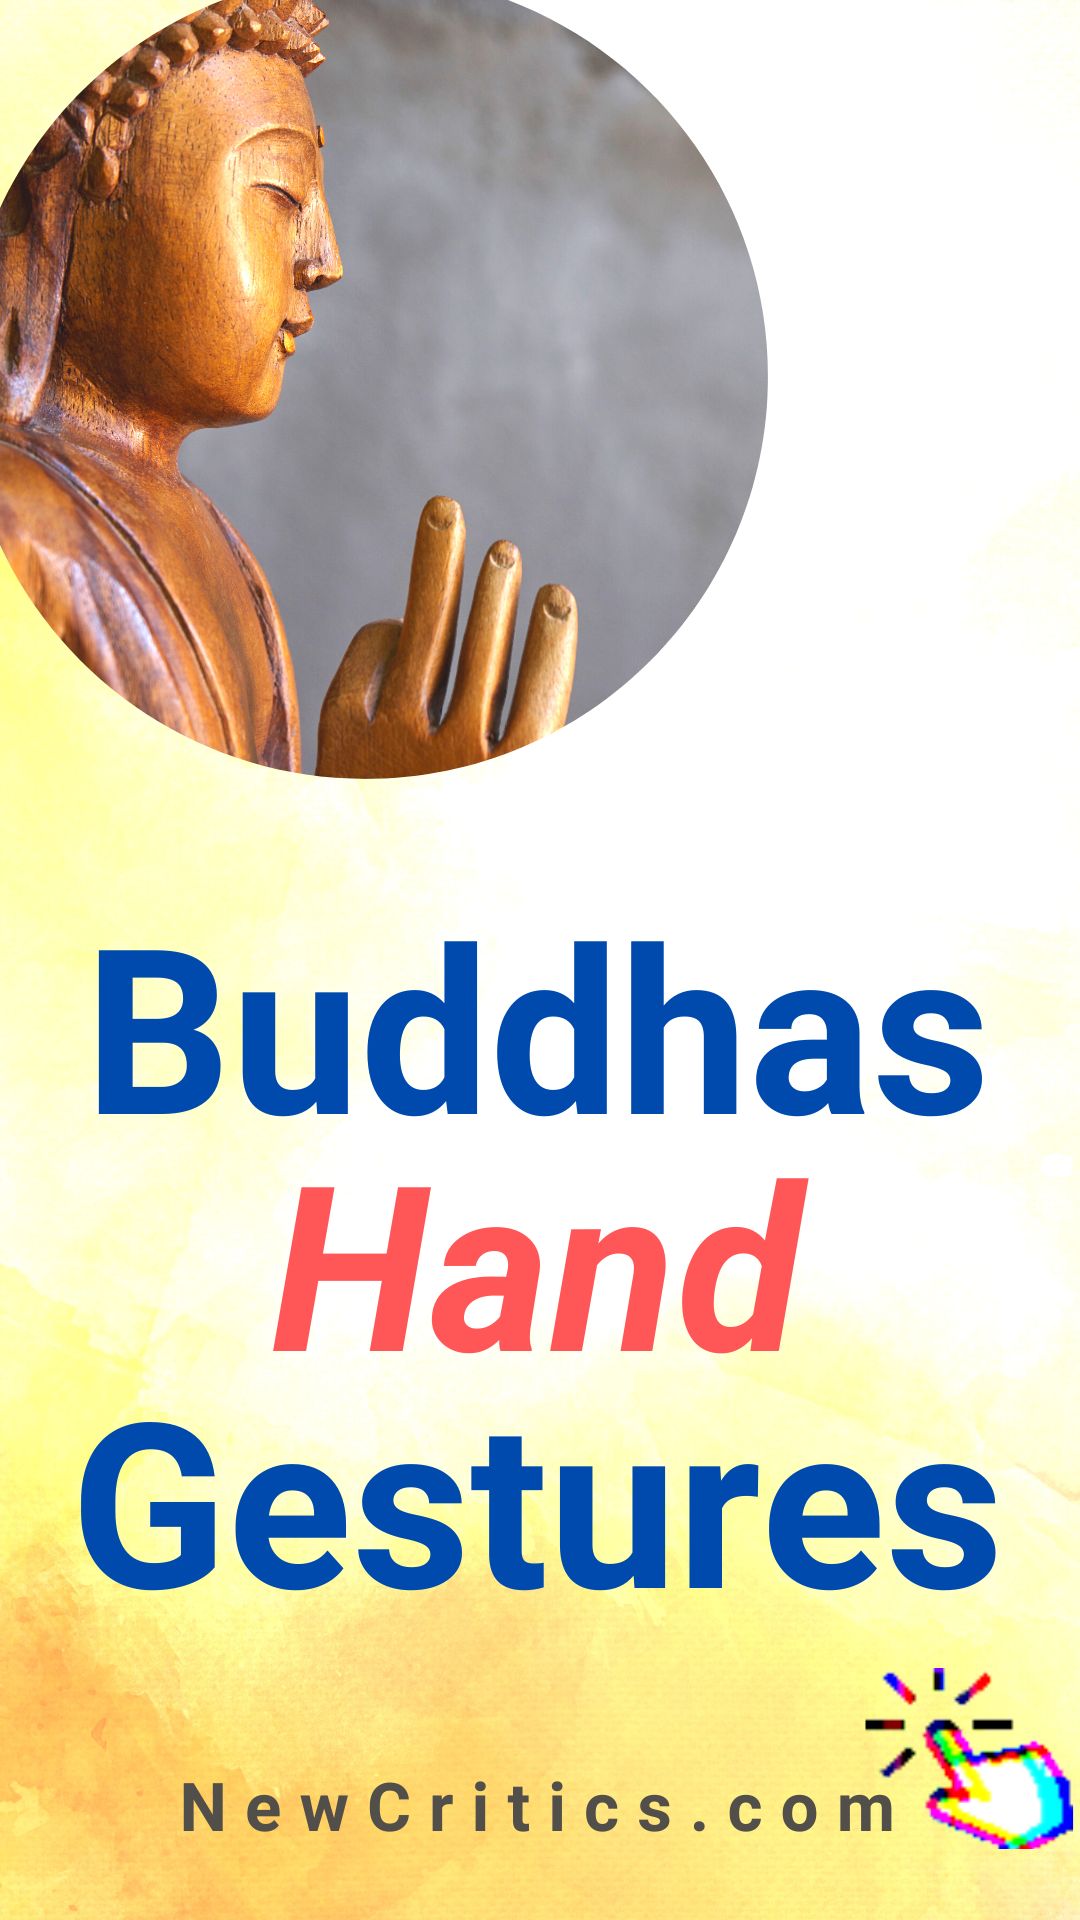 Buddhas Hand Gestures / Canva